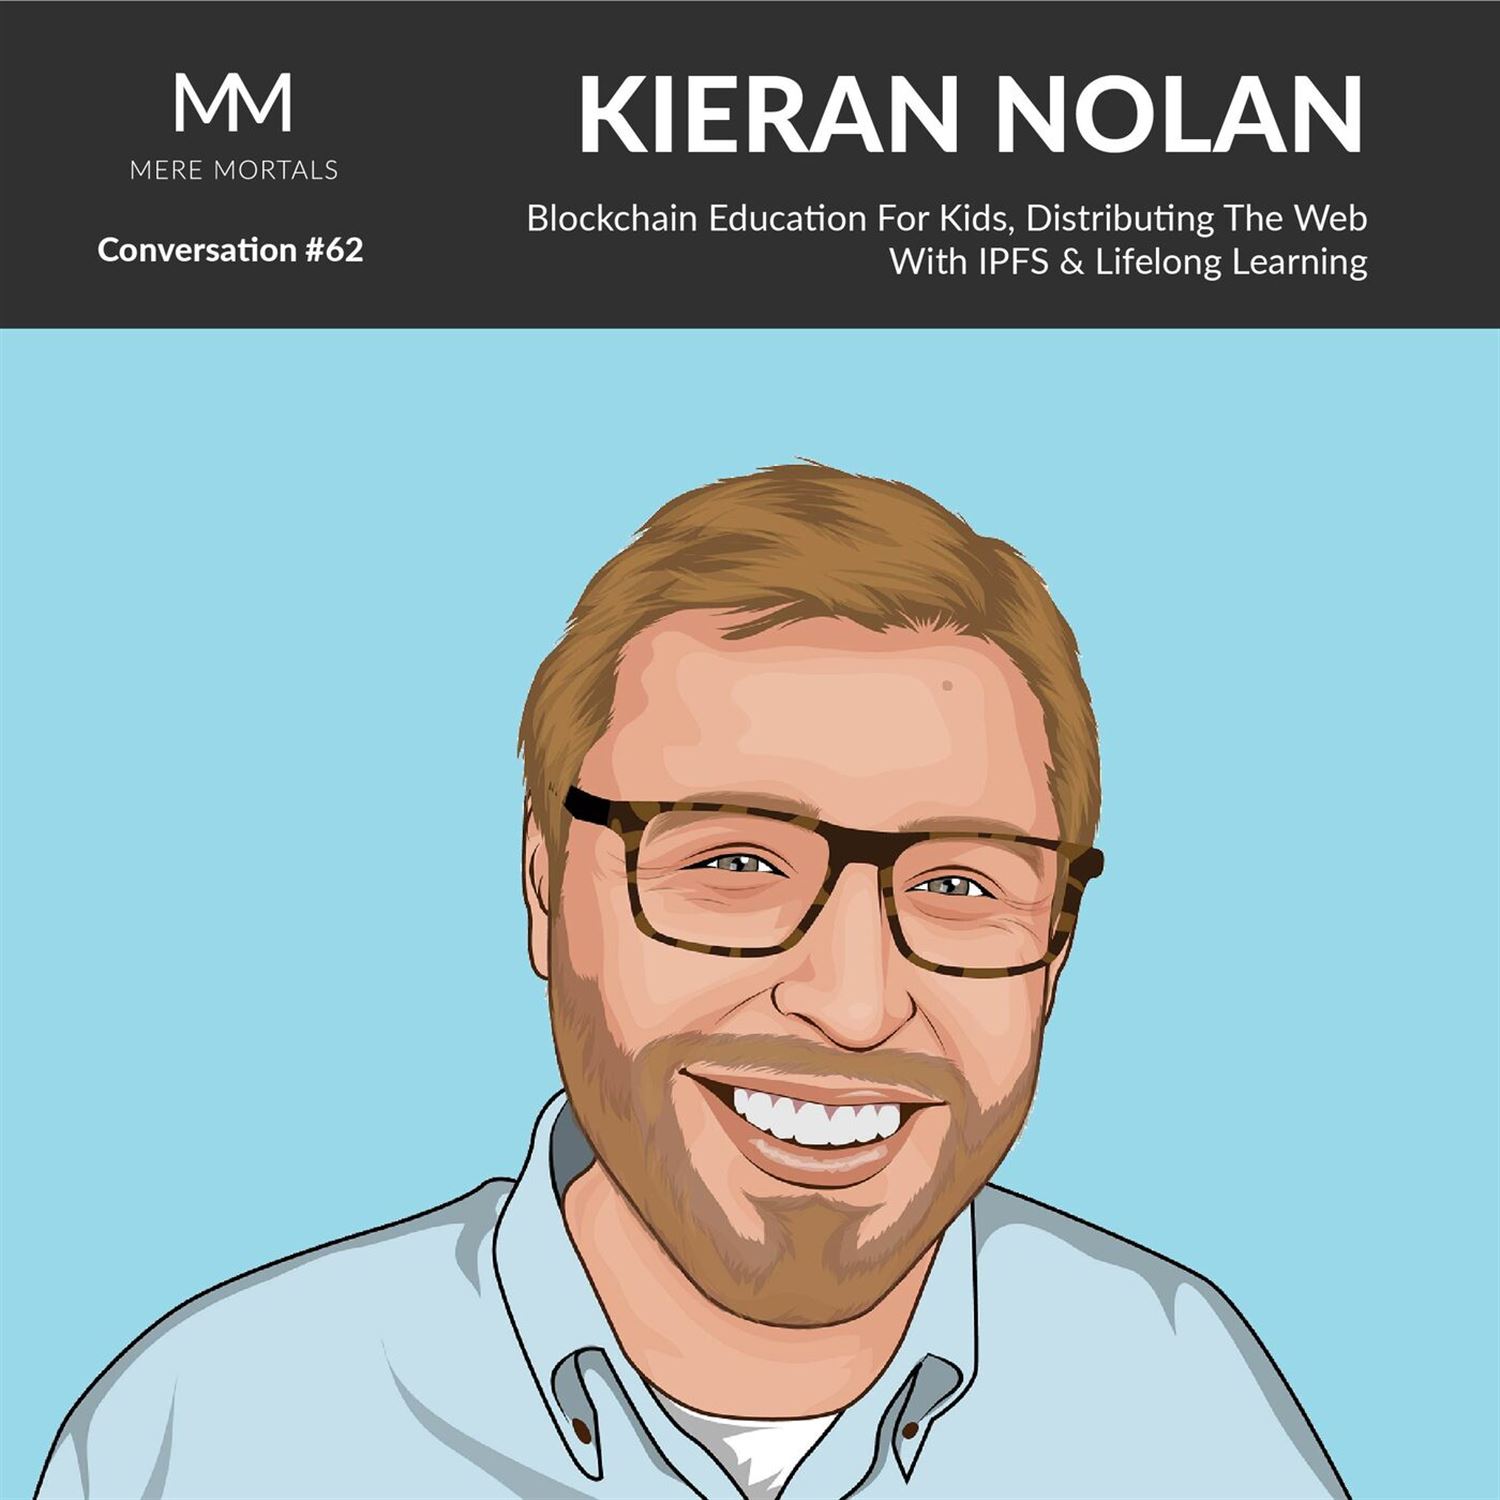 KIERAN NOLAN | Blockchain Education For Kids, Distributing The Web With IPFS & Lifelong Learning